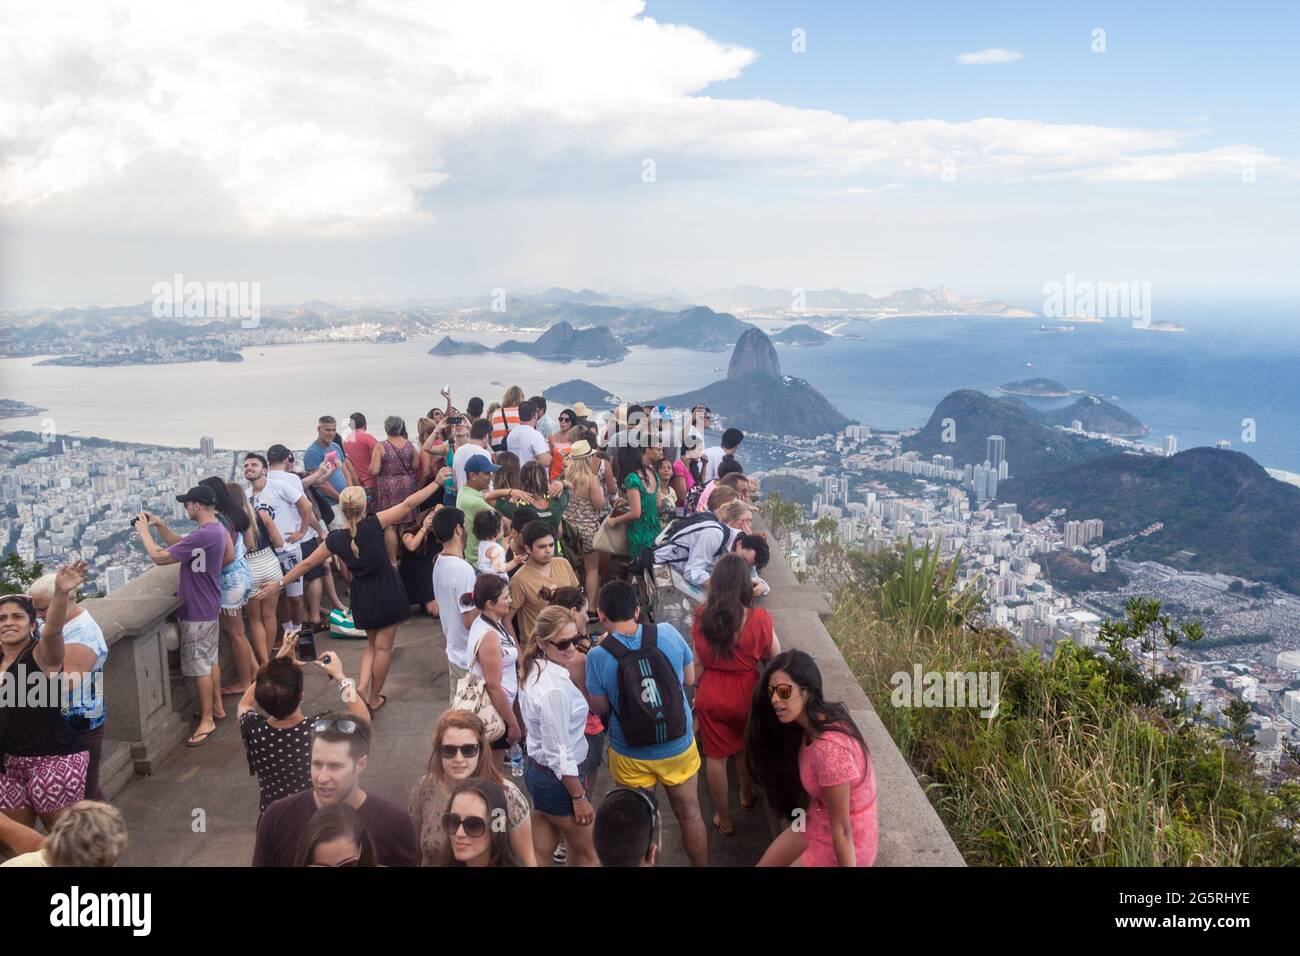 RIO DE JANEIRO, BRAZIL - JANUARY 28, 2015: Crowd of people visiting Christ the Redeemer in Rio de Janeiro, Brazil Stock Photo